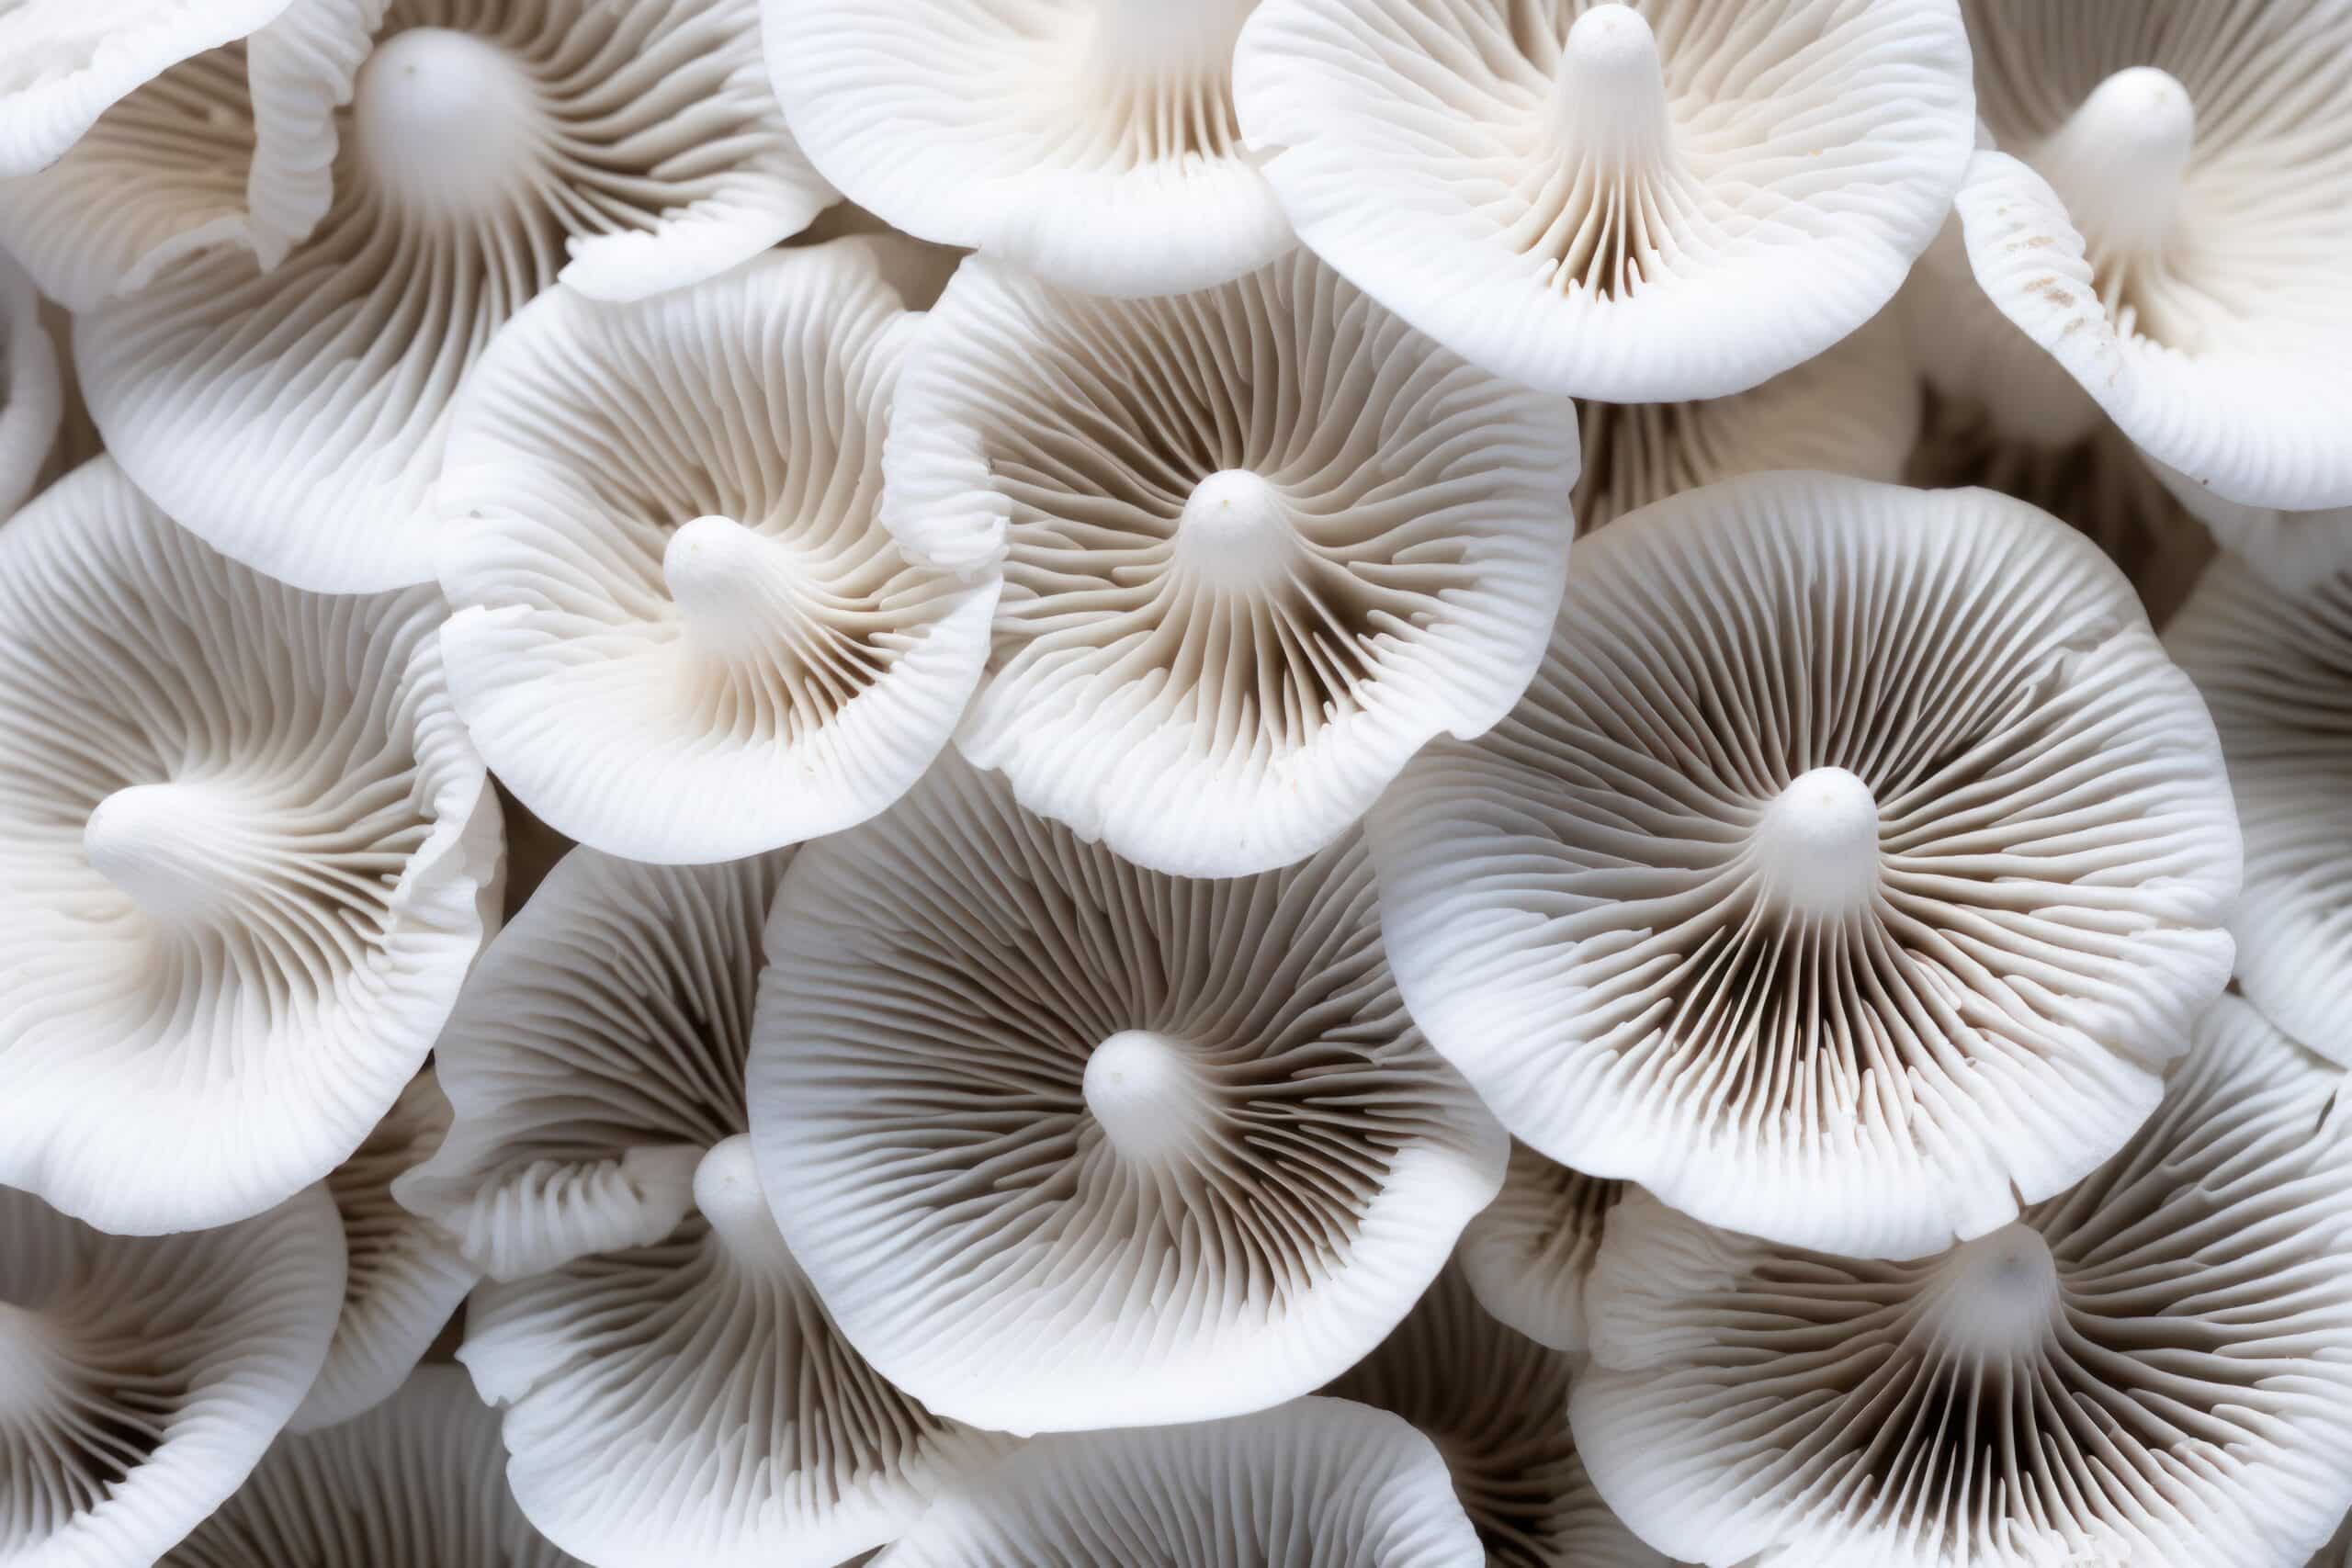 growmyownhealthfood.com : How to cultivate mushrooms using spore prints?